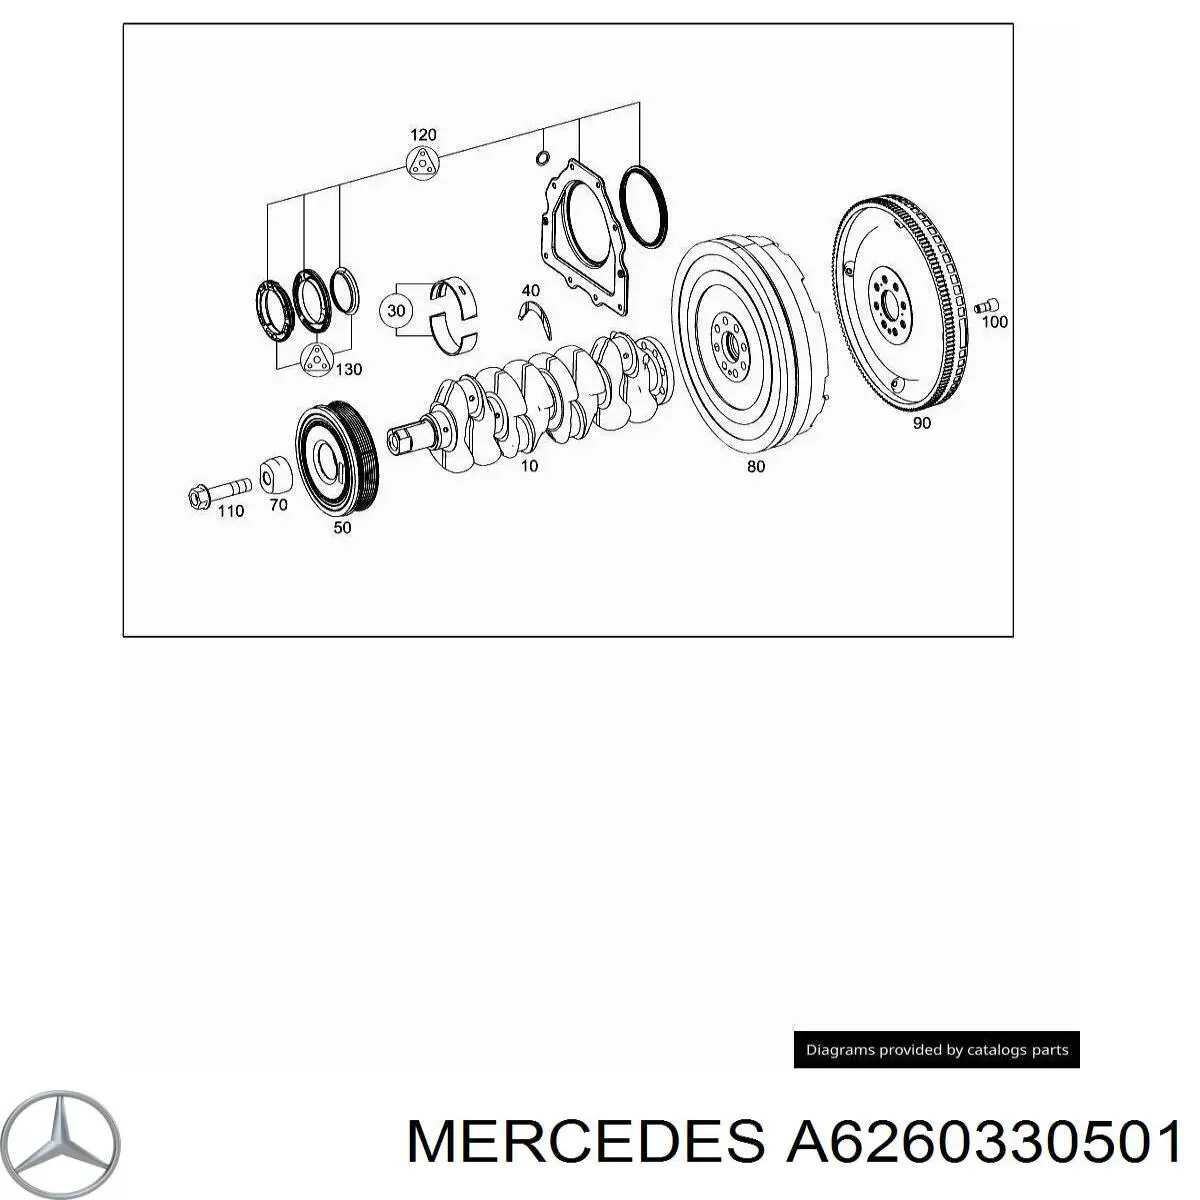 A6260330501 Mercedes вкладыши коленвала коренные, комплект, стандарт (std)